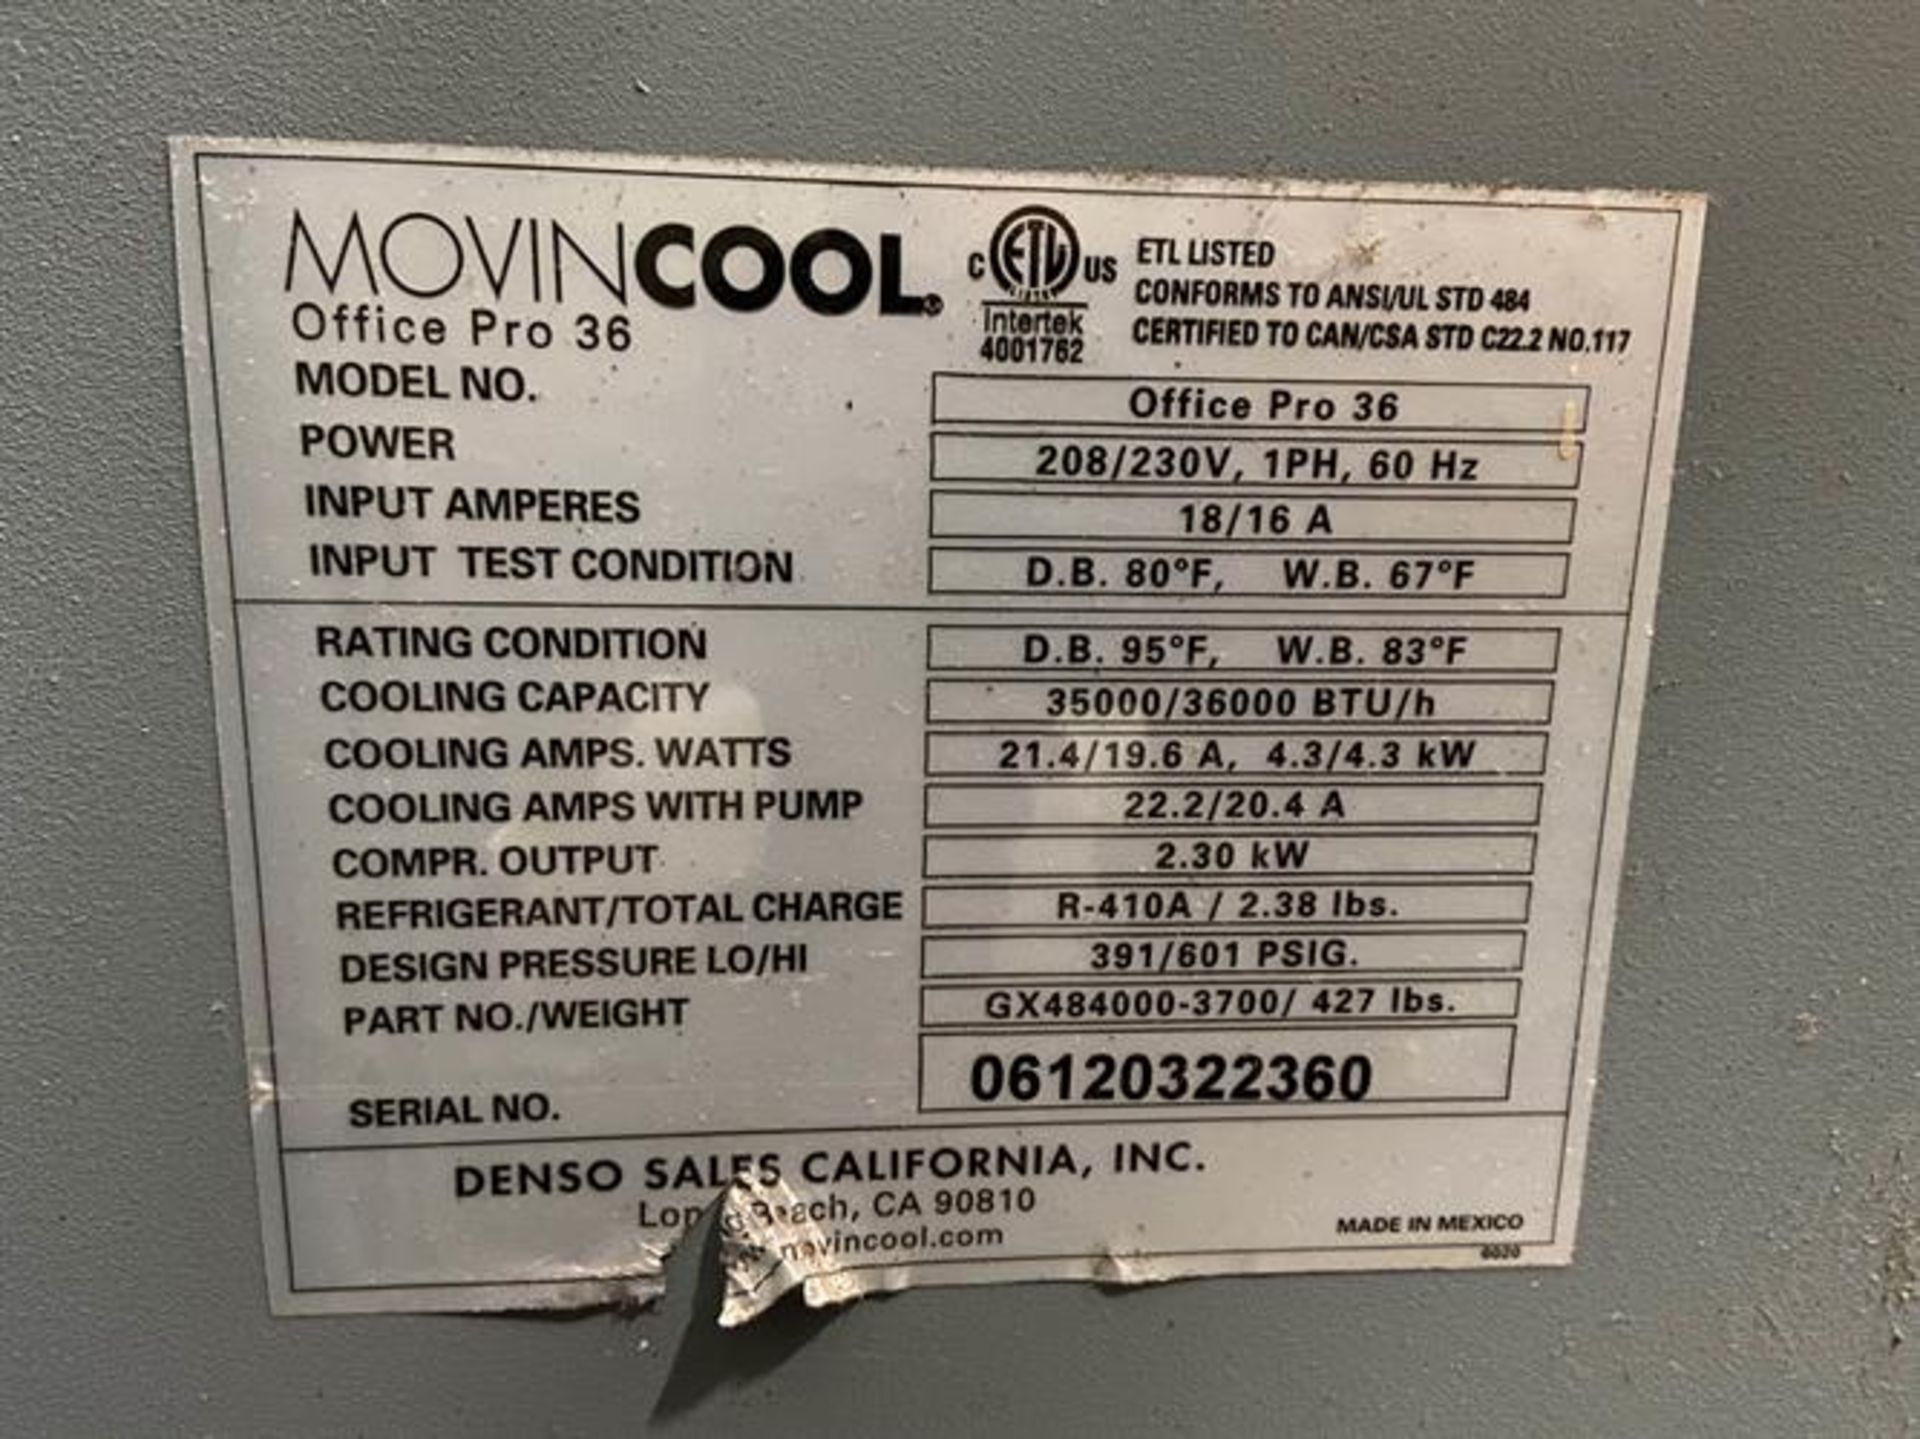 MovinCool Office Pro 36 Portable AC Unit - 36,000 BTU/hr - R-410a freon compressor - Condensate pump - Image 2 of 9